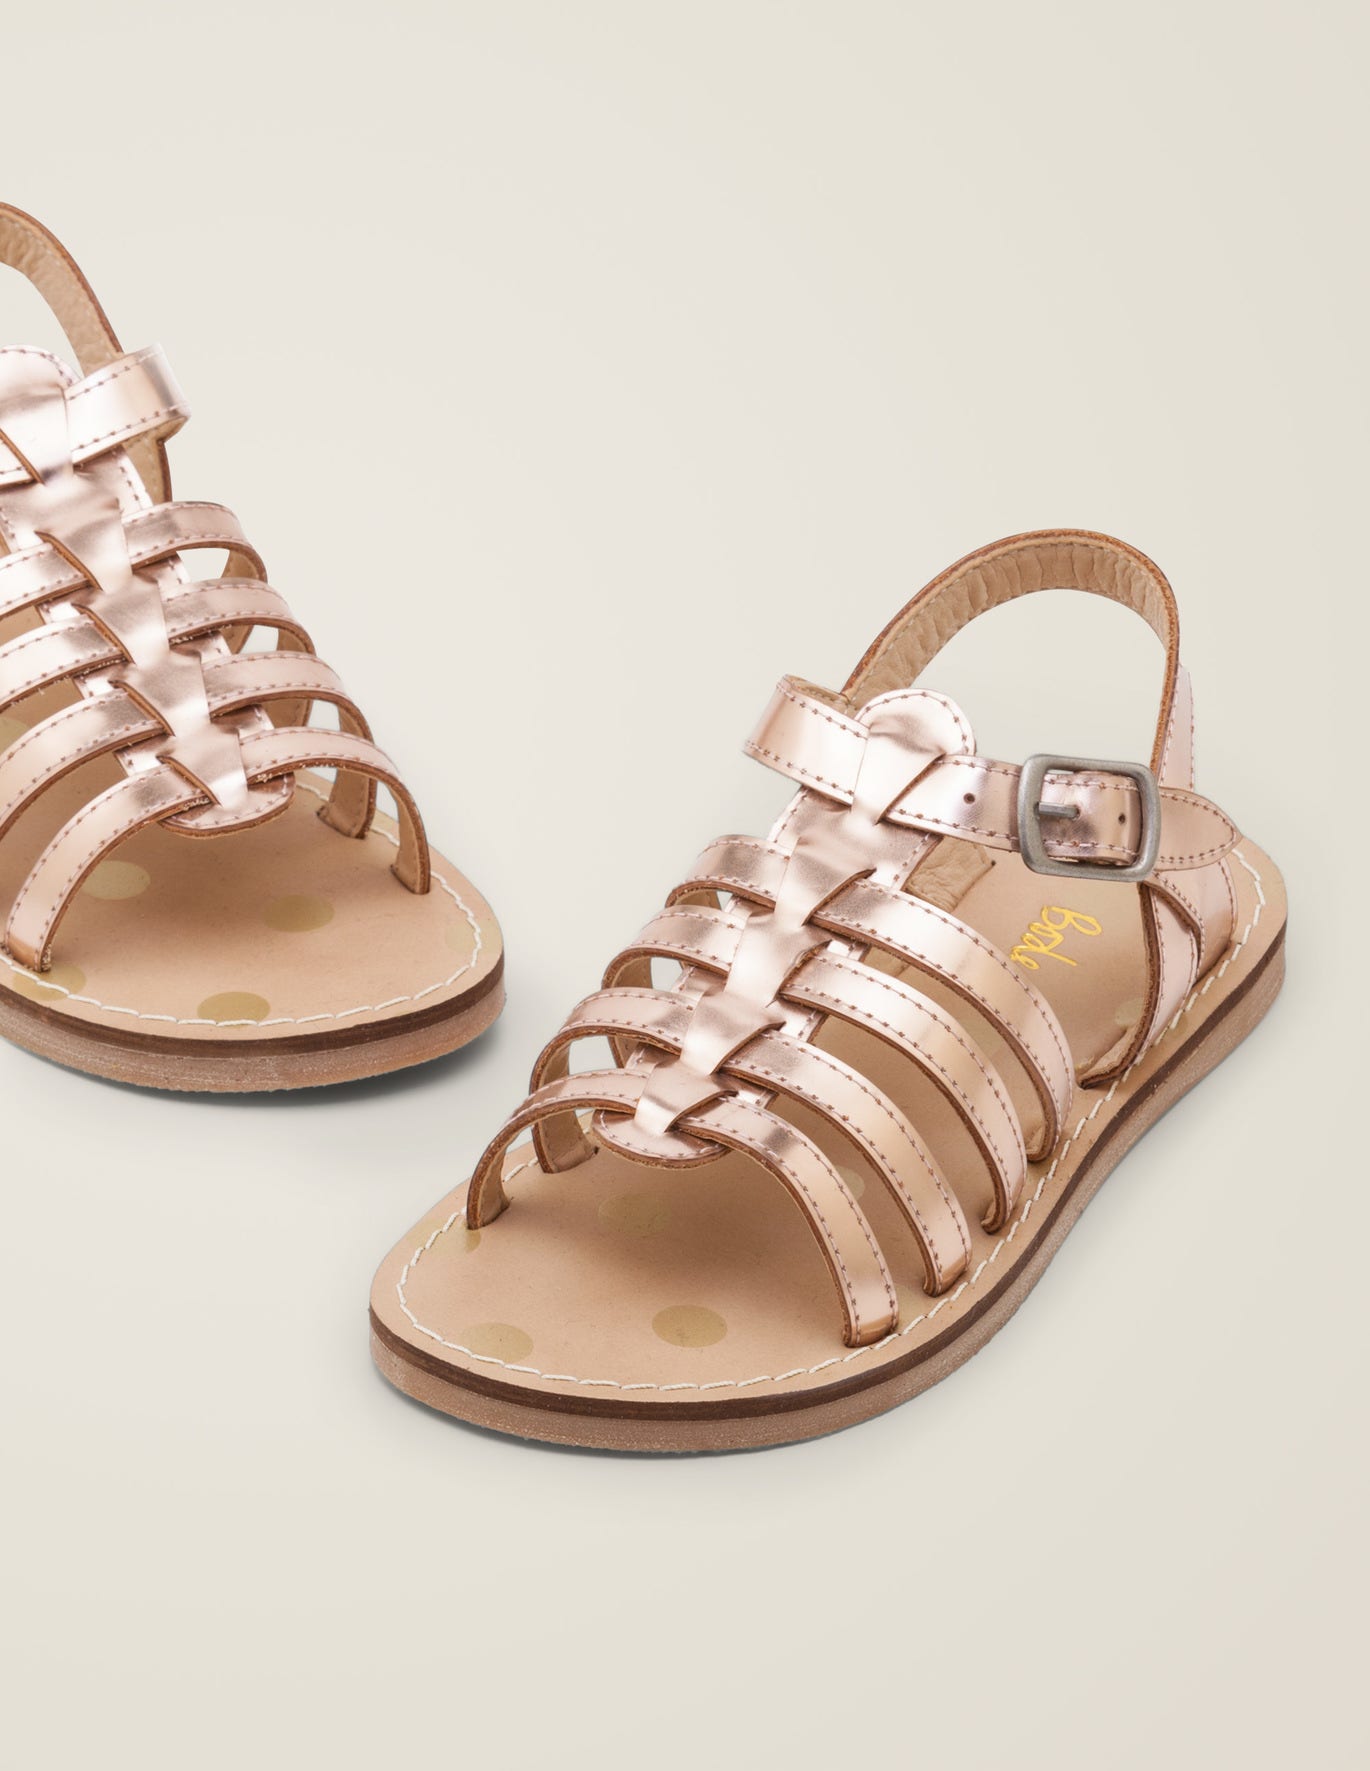 Boden Leather Gladiator Sandals - Rose Gold Metallic